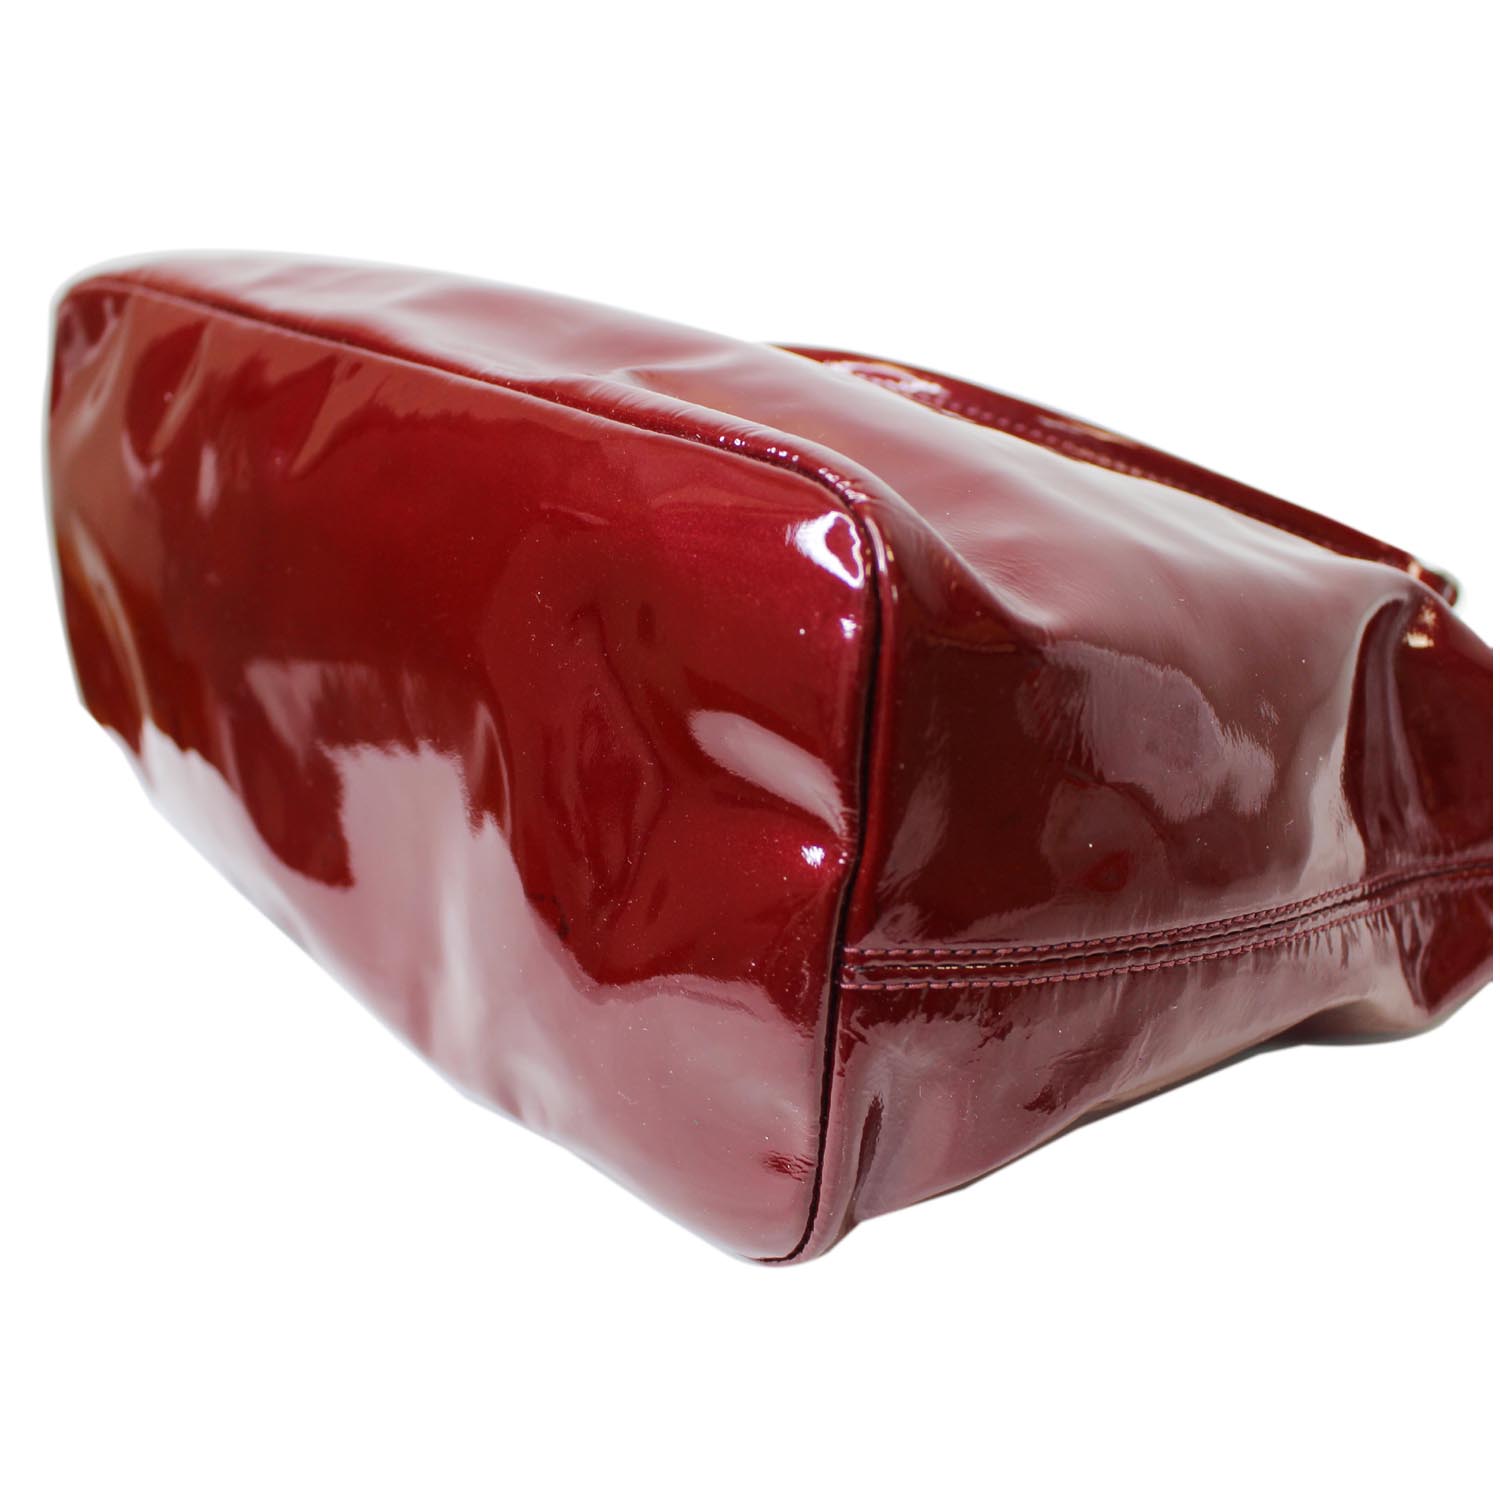 Louis Vuitton Red Patent leather Handbag  Patent leather handbags, Red patent  leather handbag, Leather handbags